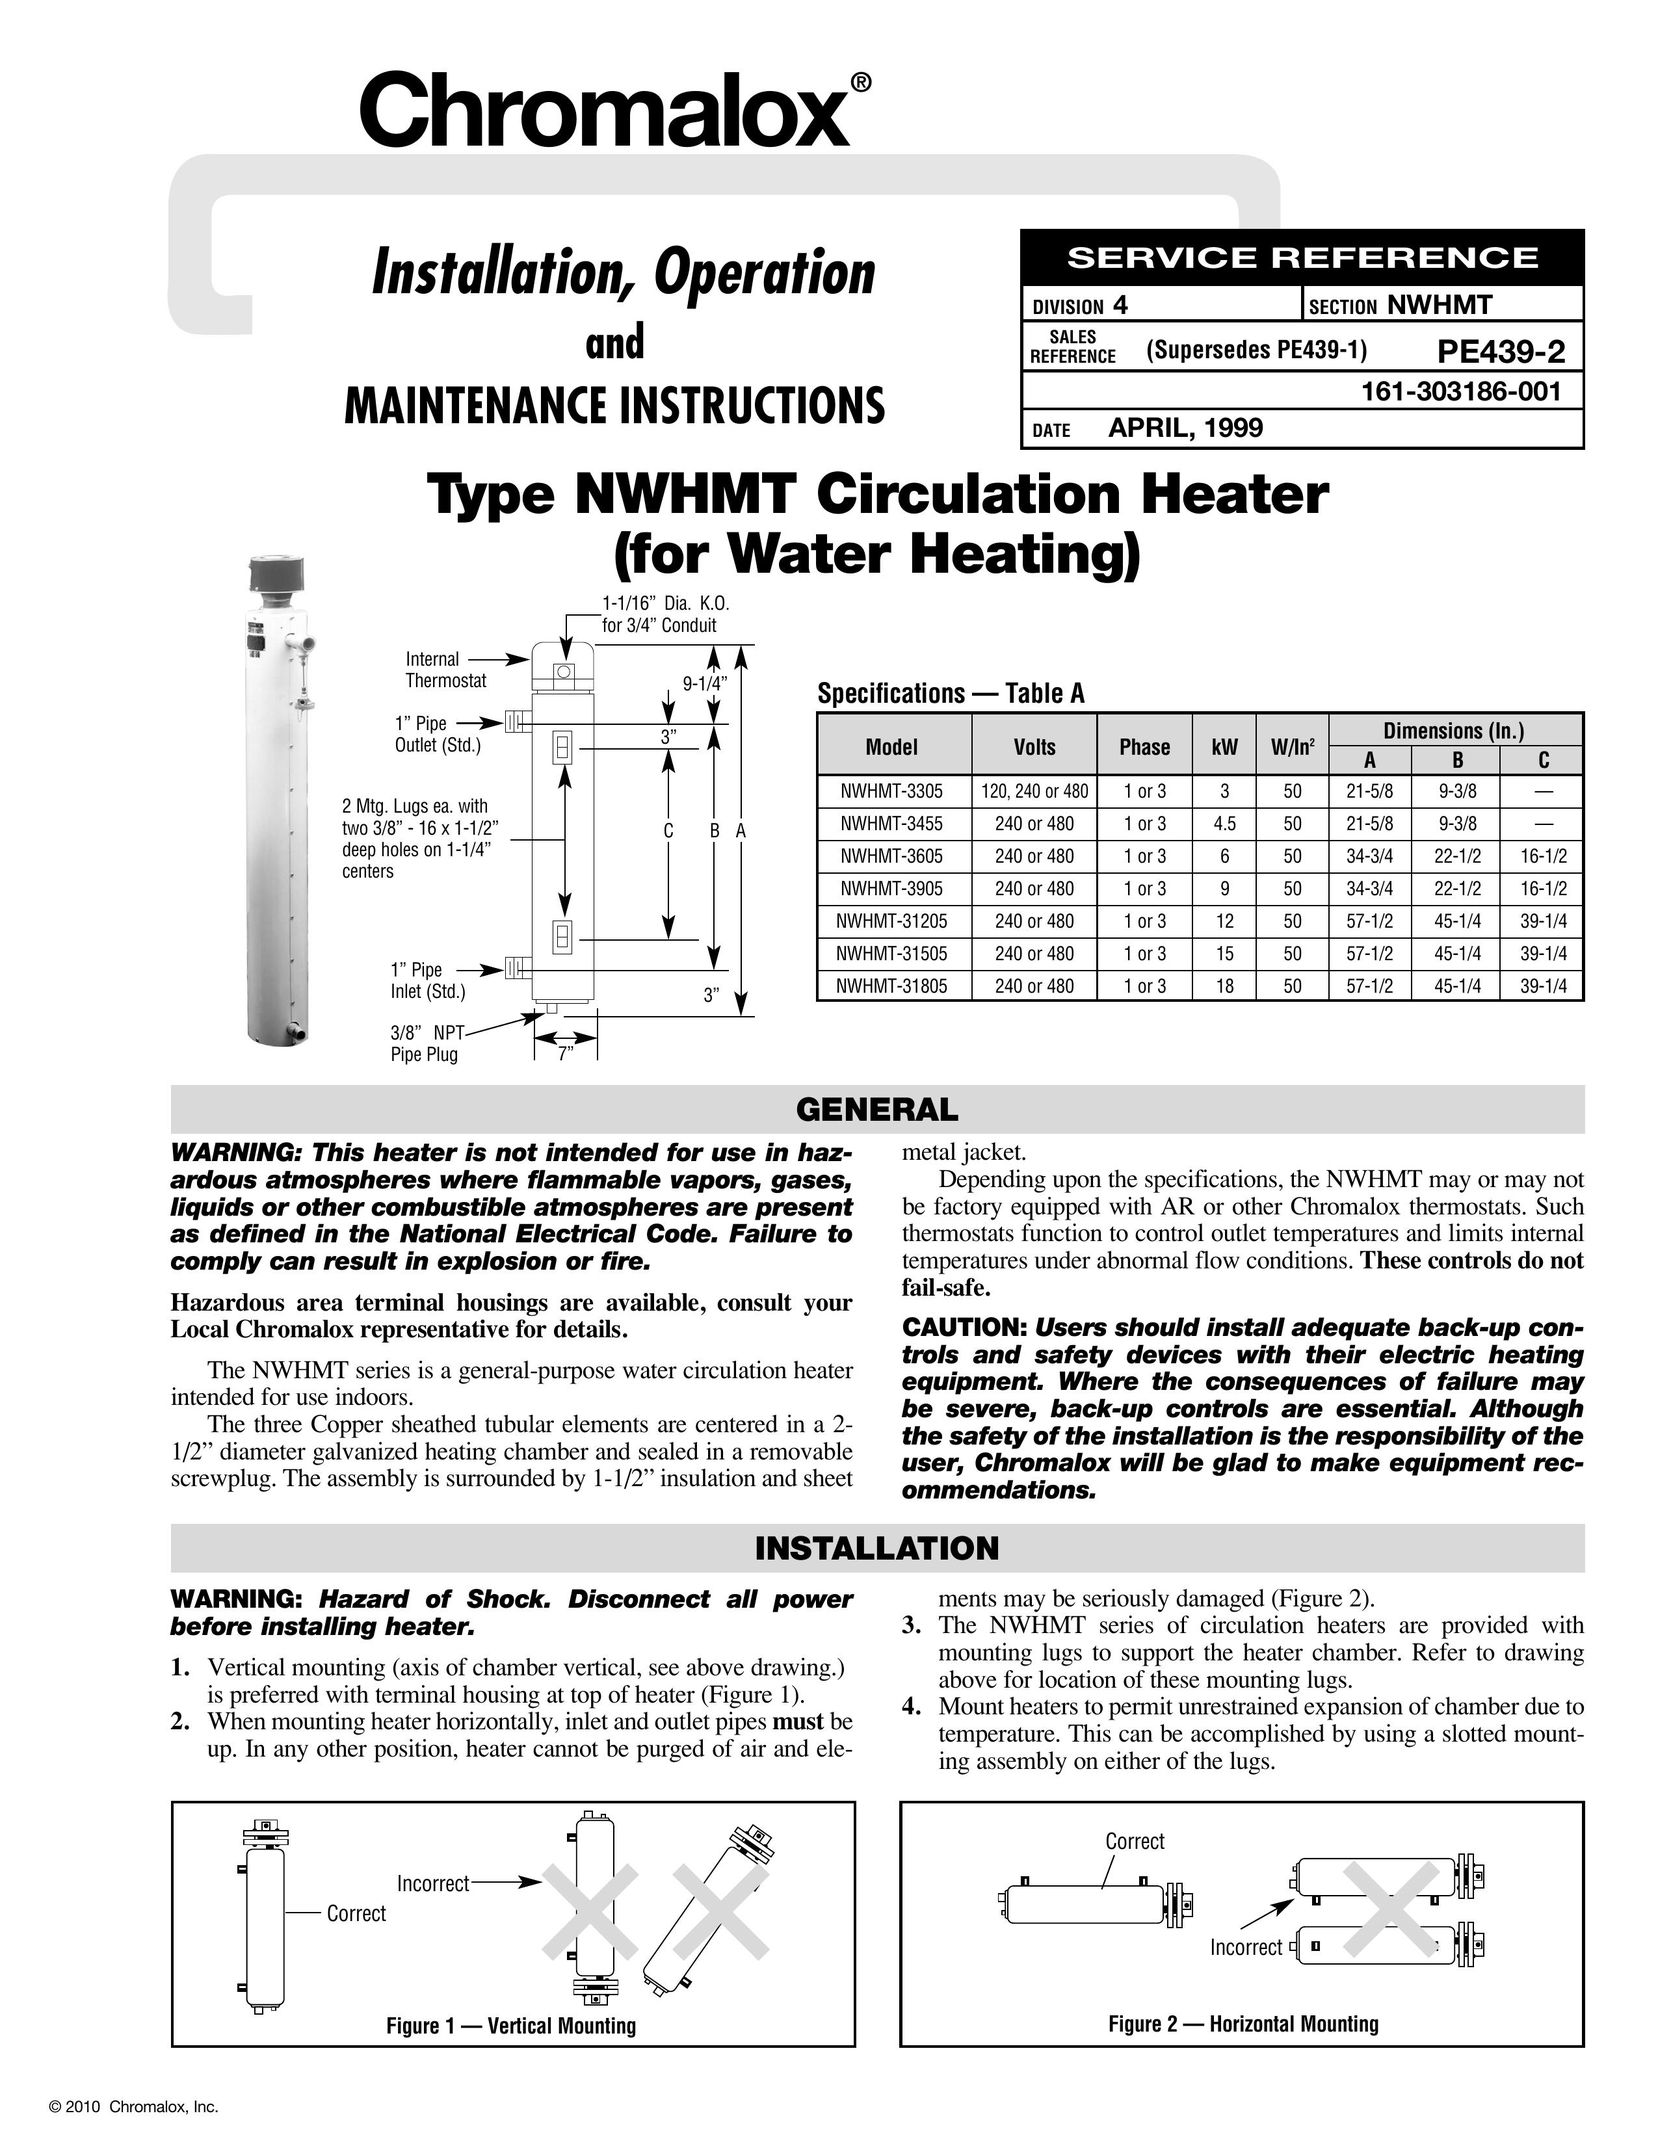 Chromalox NWHMT Water Heater User Manual